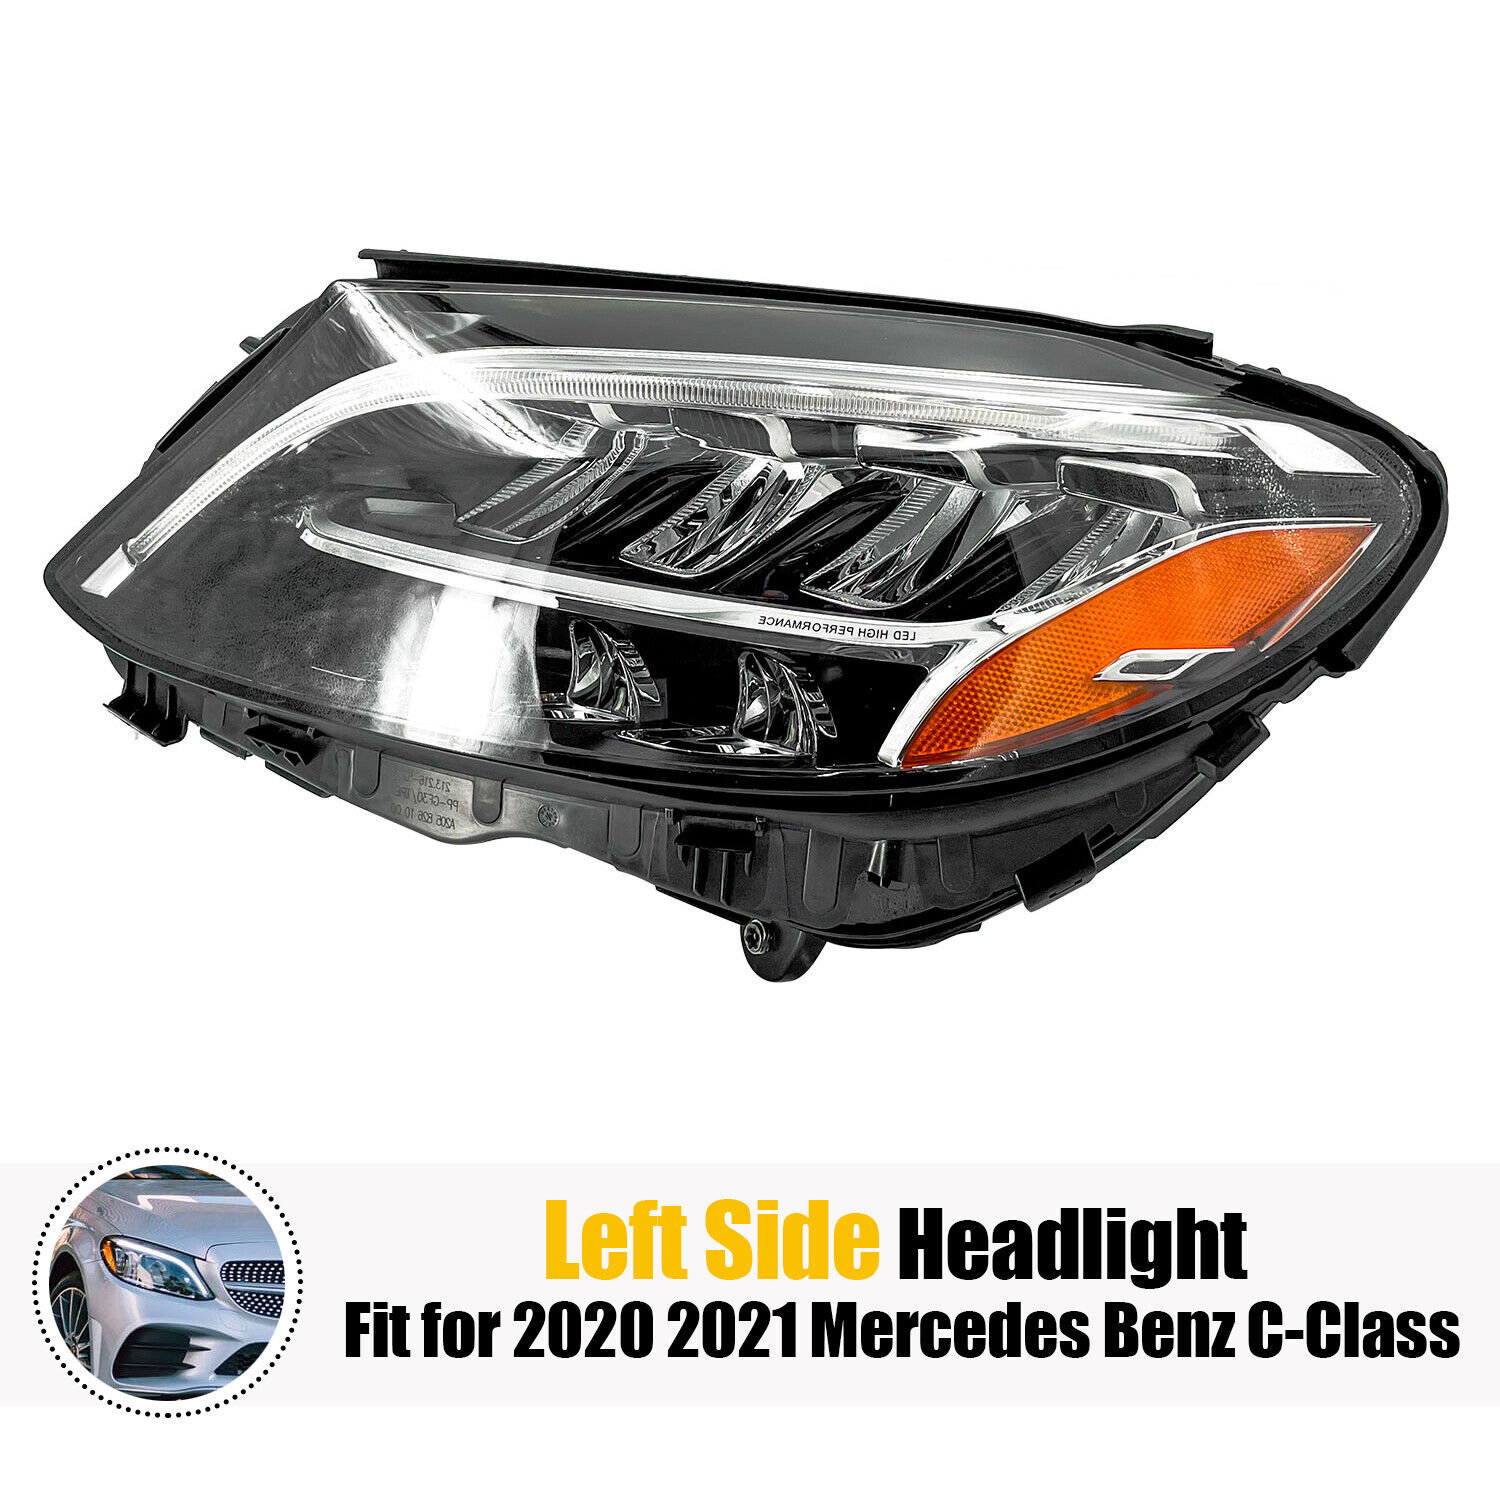 Left Side LED Headlight Fit For 2020 2021 Mercedes C-class C300 C43 C63 AMG